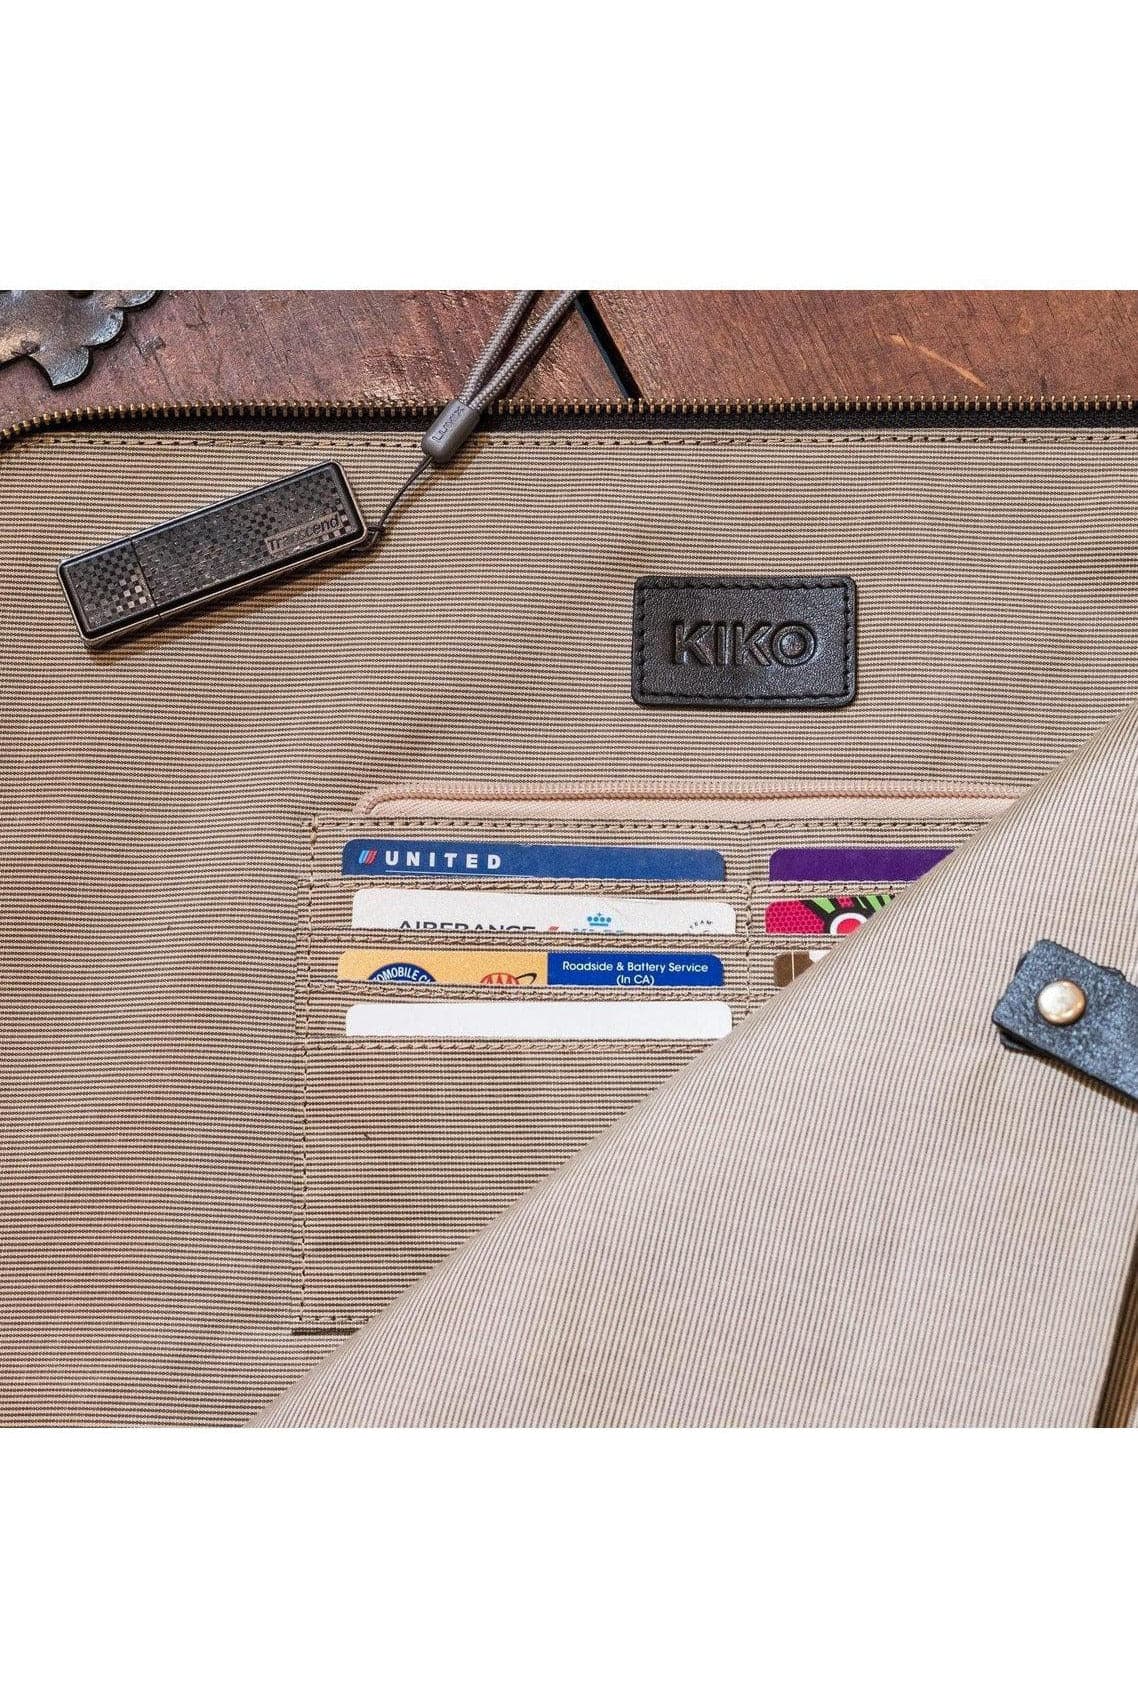 The Tech-Folio | Kiko Leather - SwagglyLife Home & Fashion